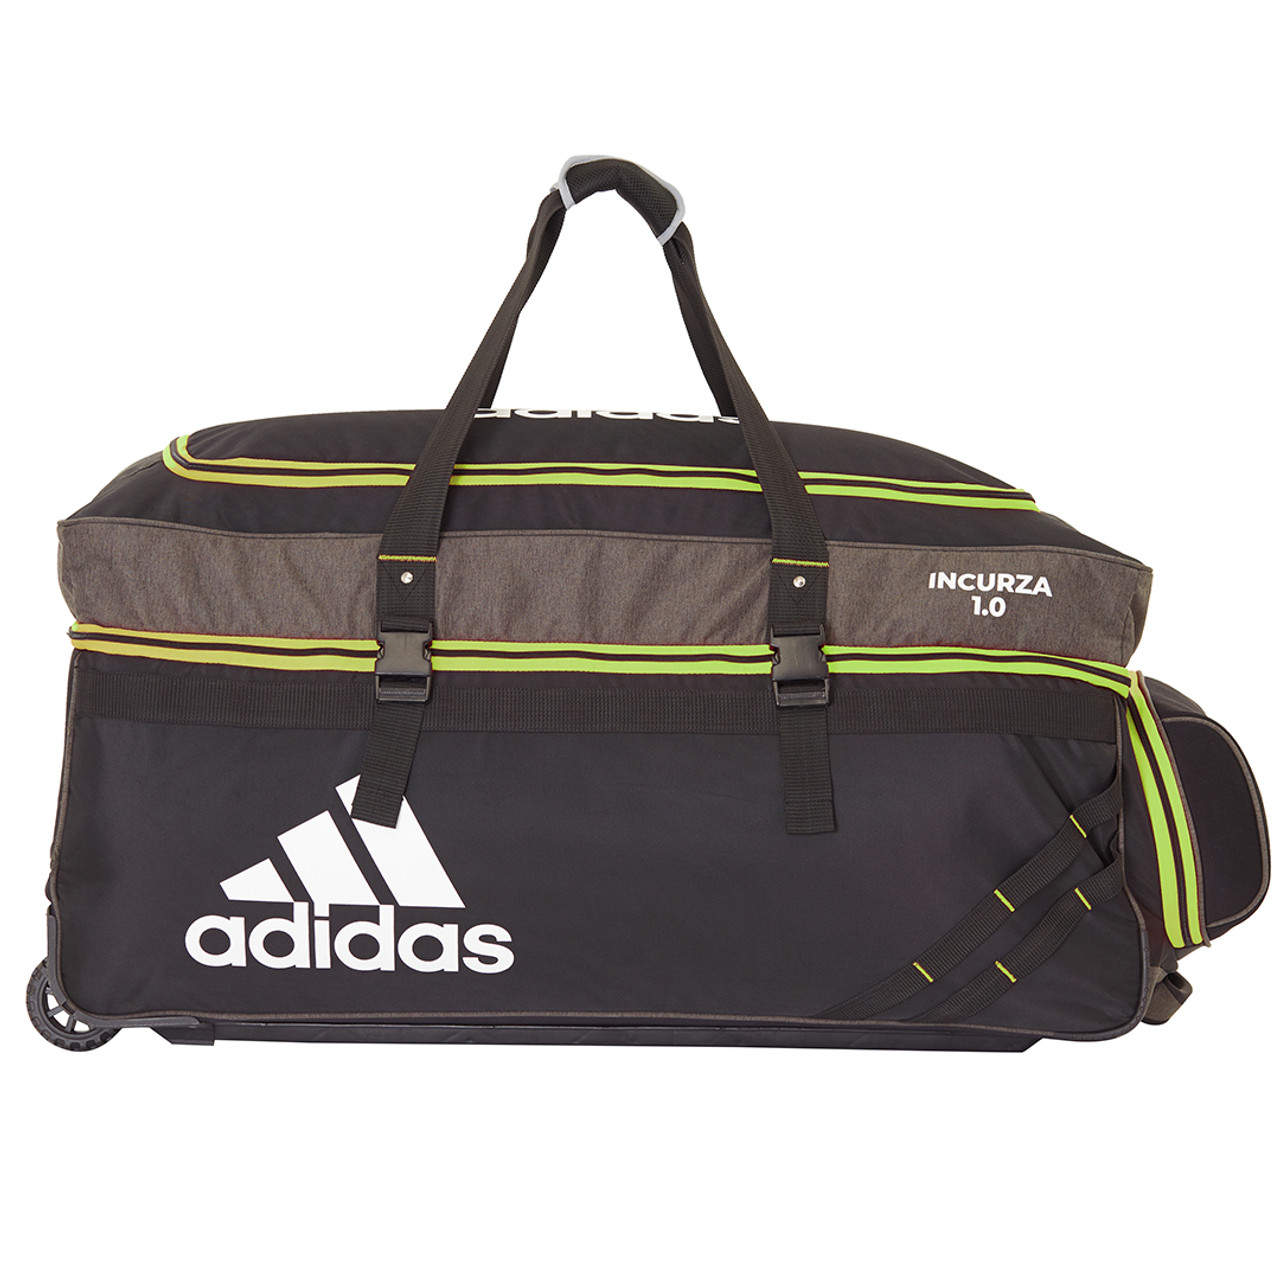 Adidas INCURZA 1.0 Wheelie Cricket Kit Bag